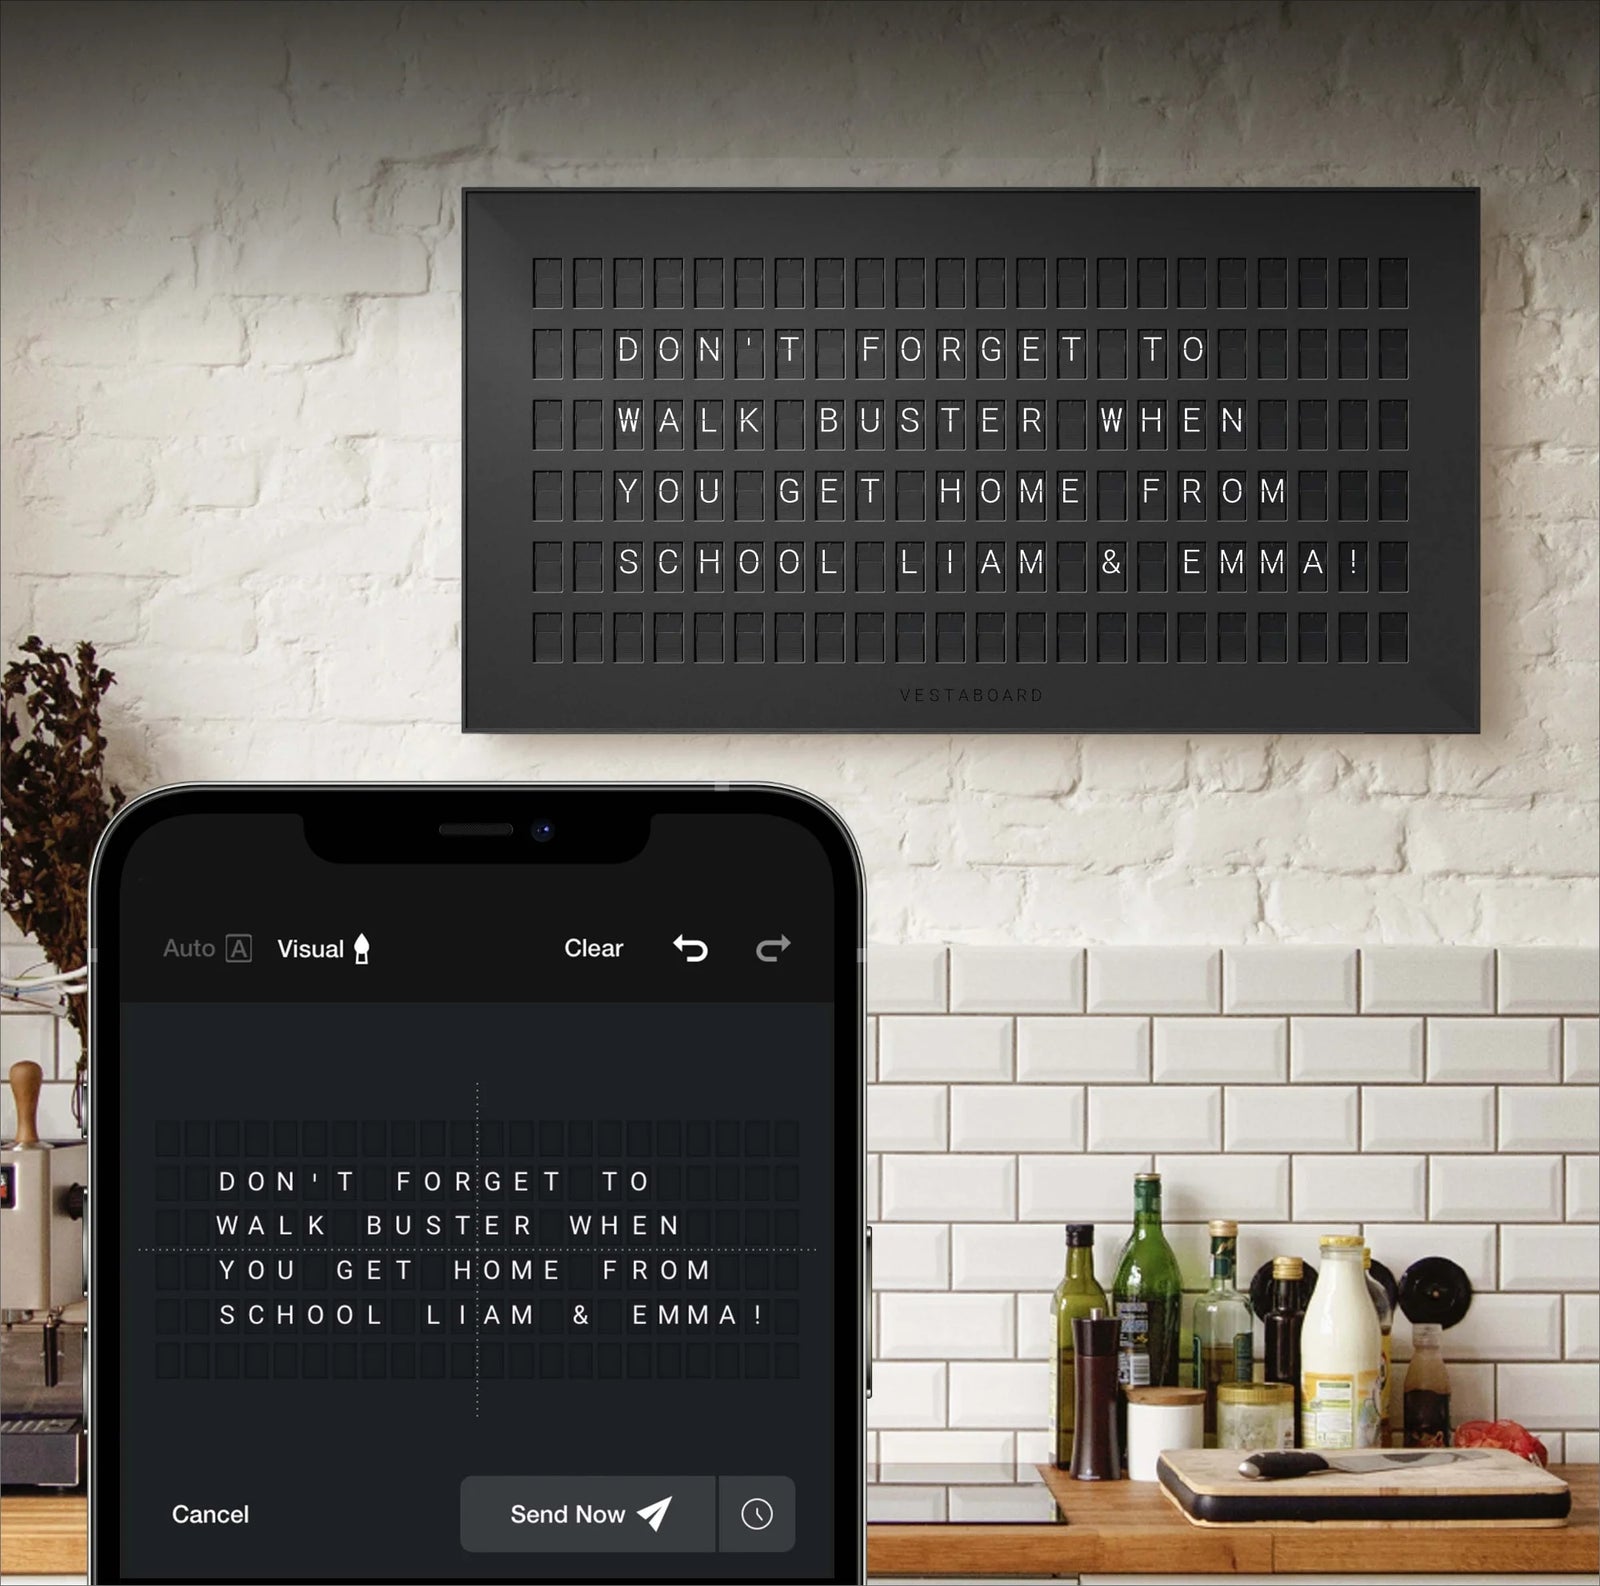 Internet message board: Unboxing my new Vestaboard smart display